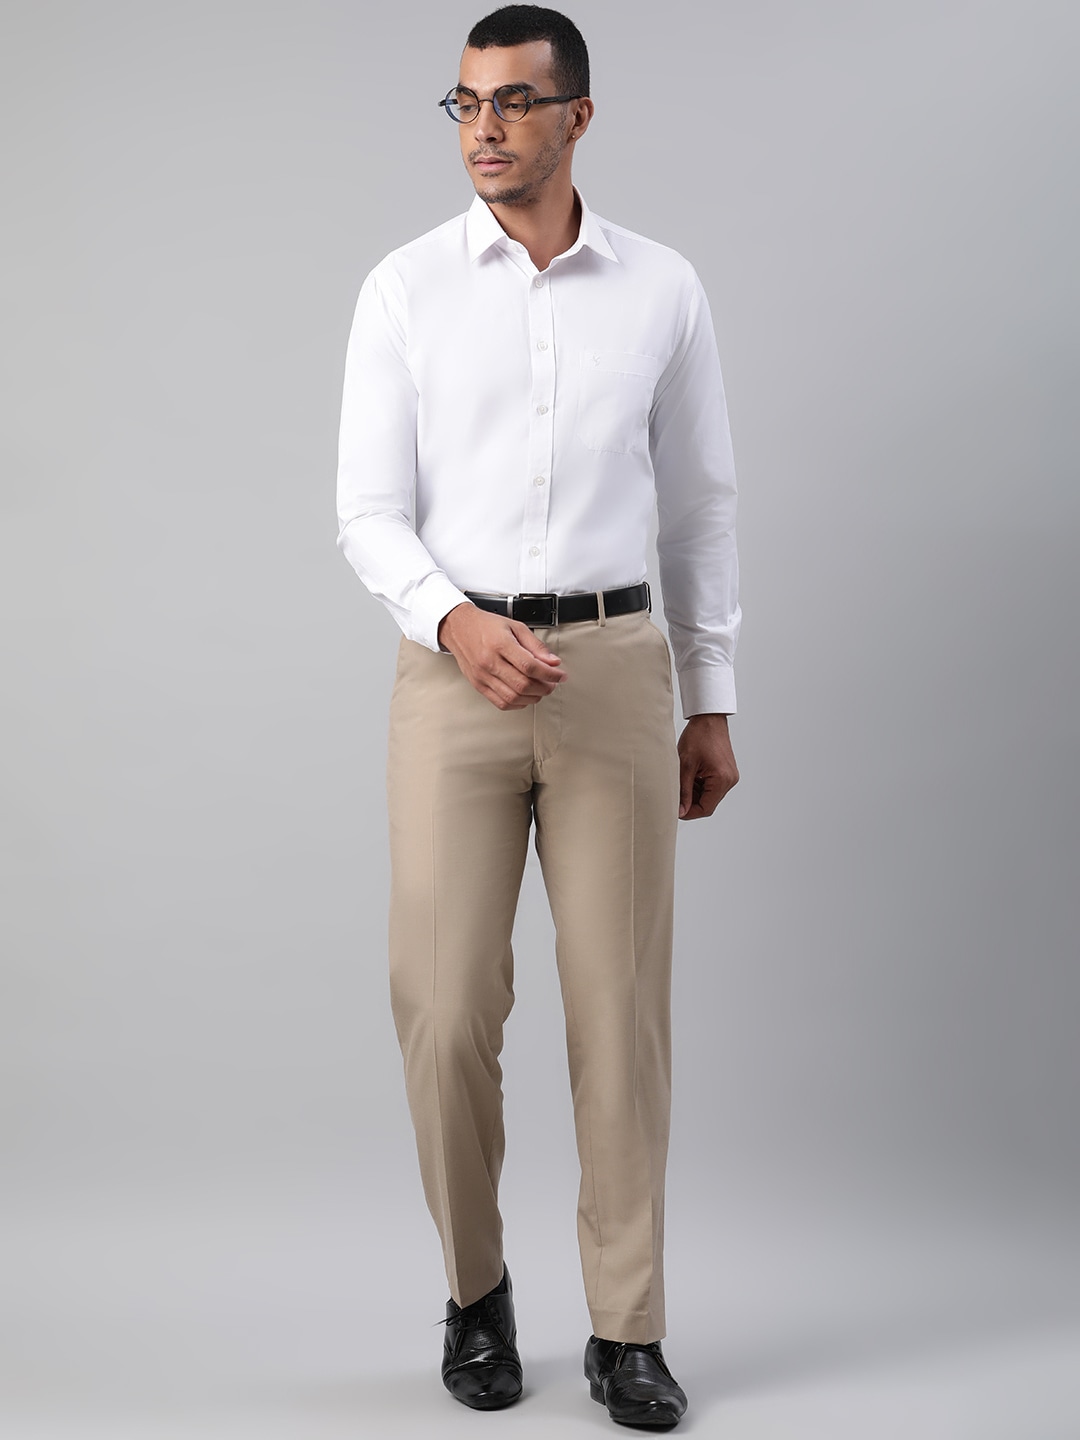 Beige Trouser White Shirt Combination